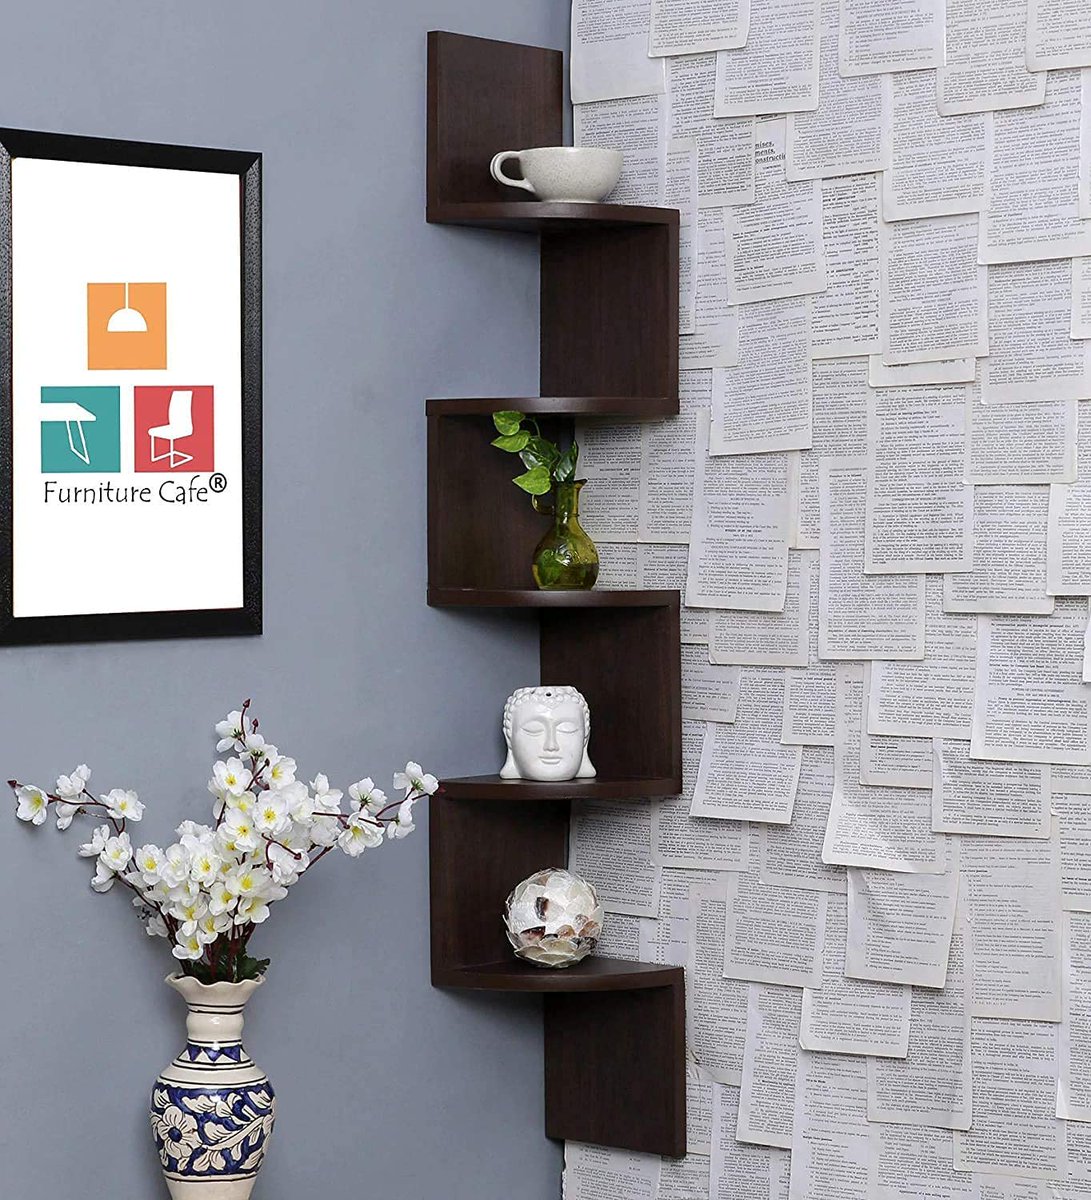 Furniture Cafe Wooden Wall Shelves | Corner Hanging Shelf for Living Room Stylish | Zig Zag Home Decor Floating Display Rack Storage Organizer Unique Design.

amzn.to/401wbmc

#furniturecafe #AmazonDeals